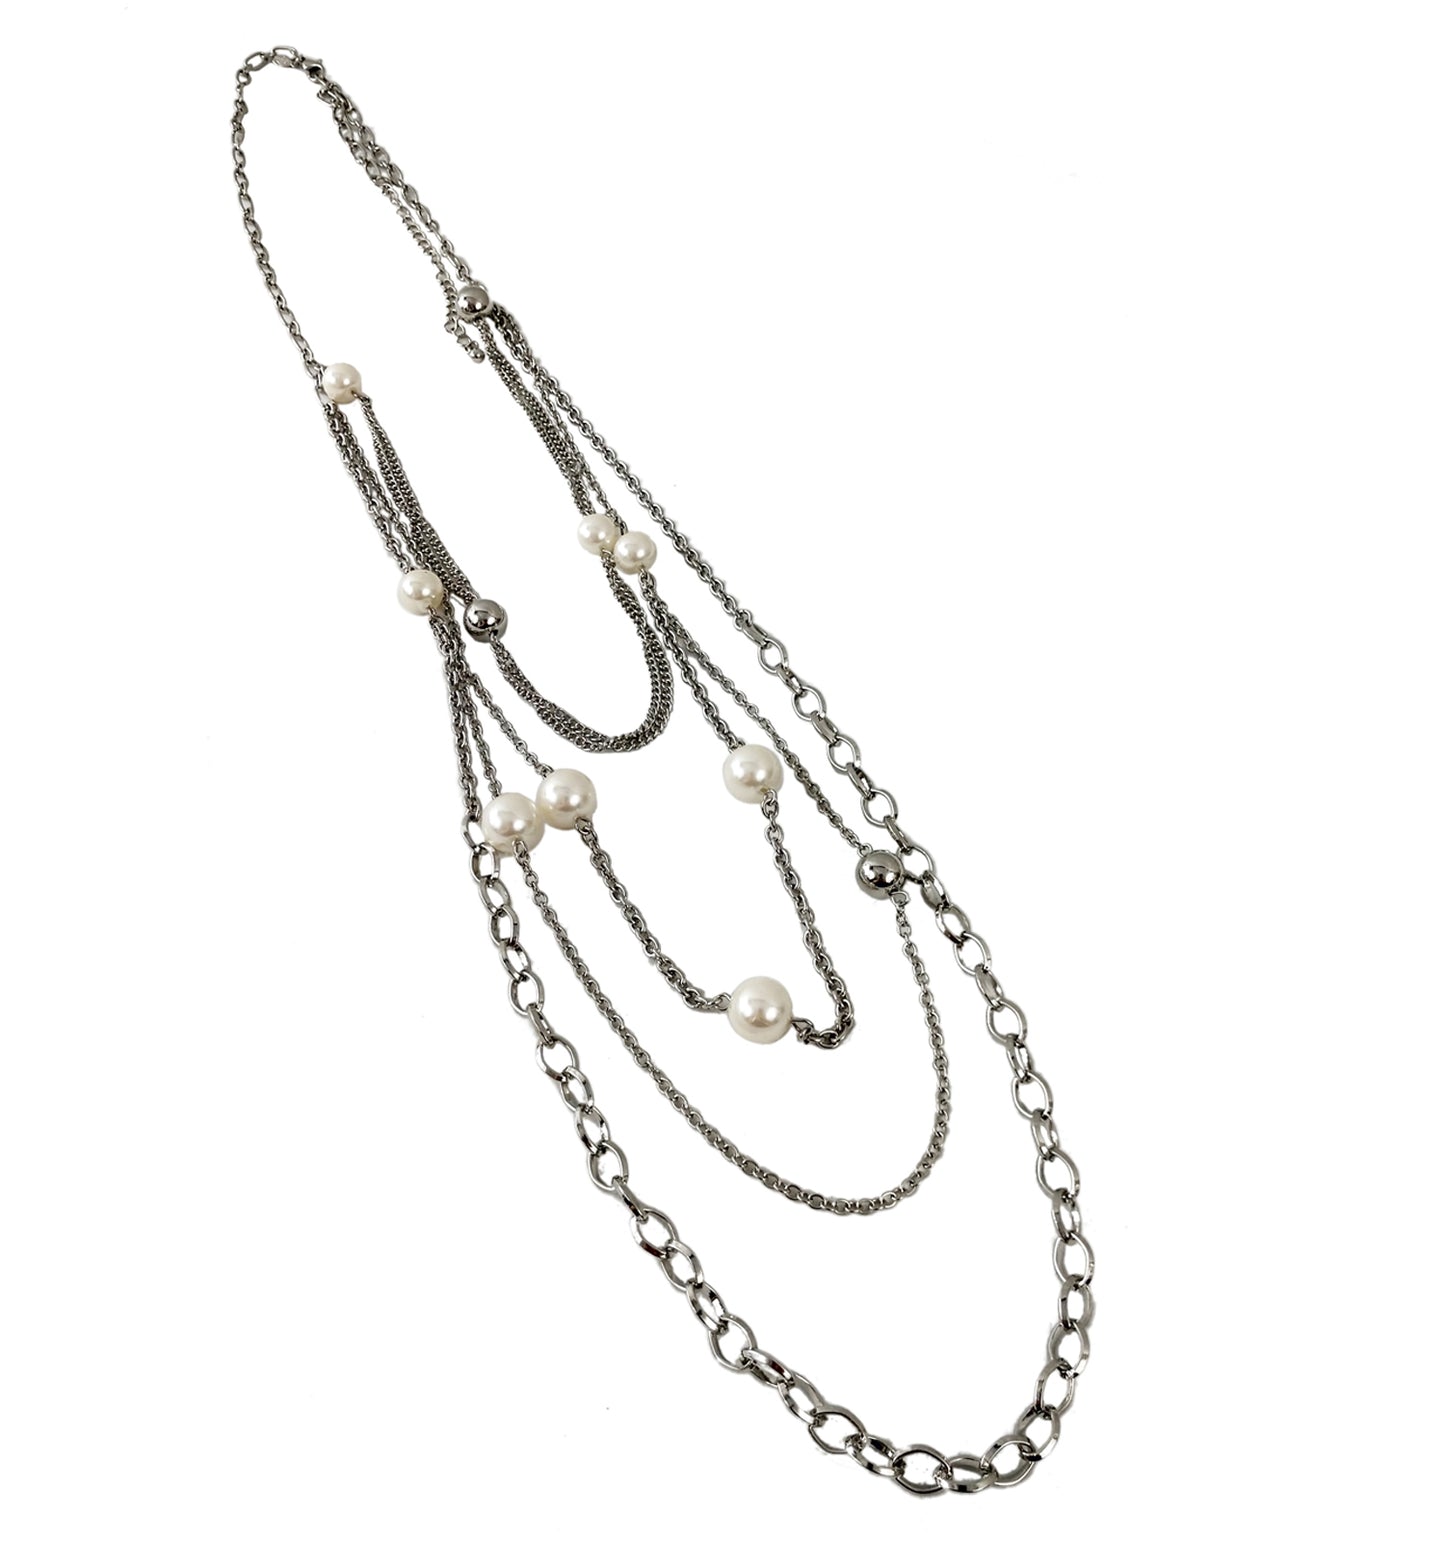 Premier Designs Multi Strand Silver Tone Chain Faux Pearl Necklace 25-28" NWOT